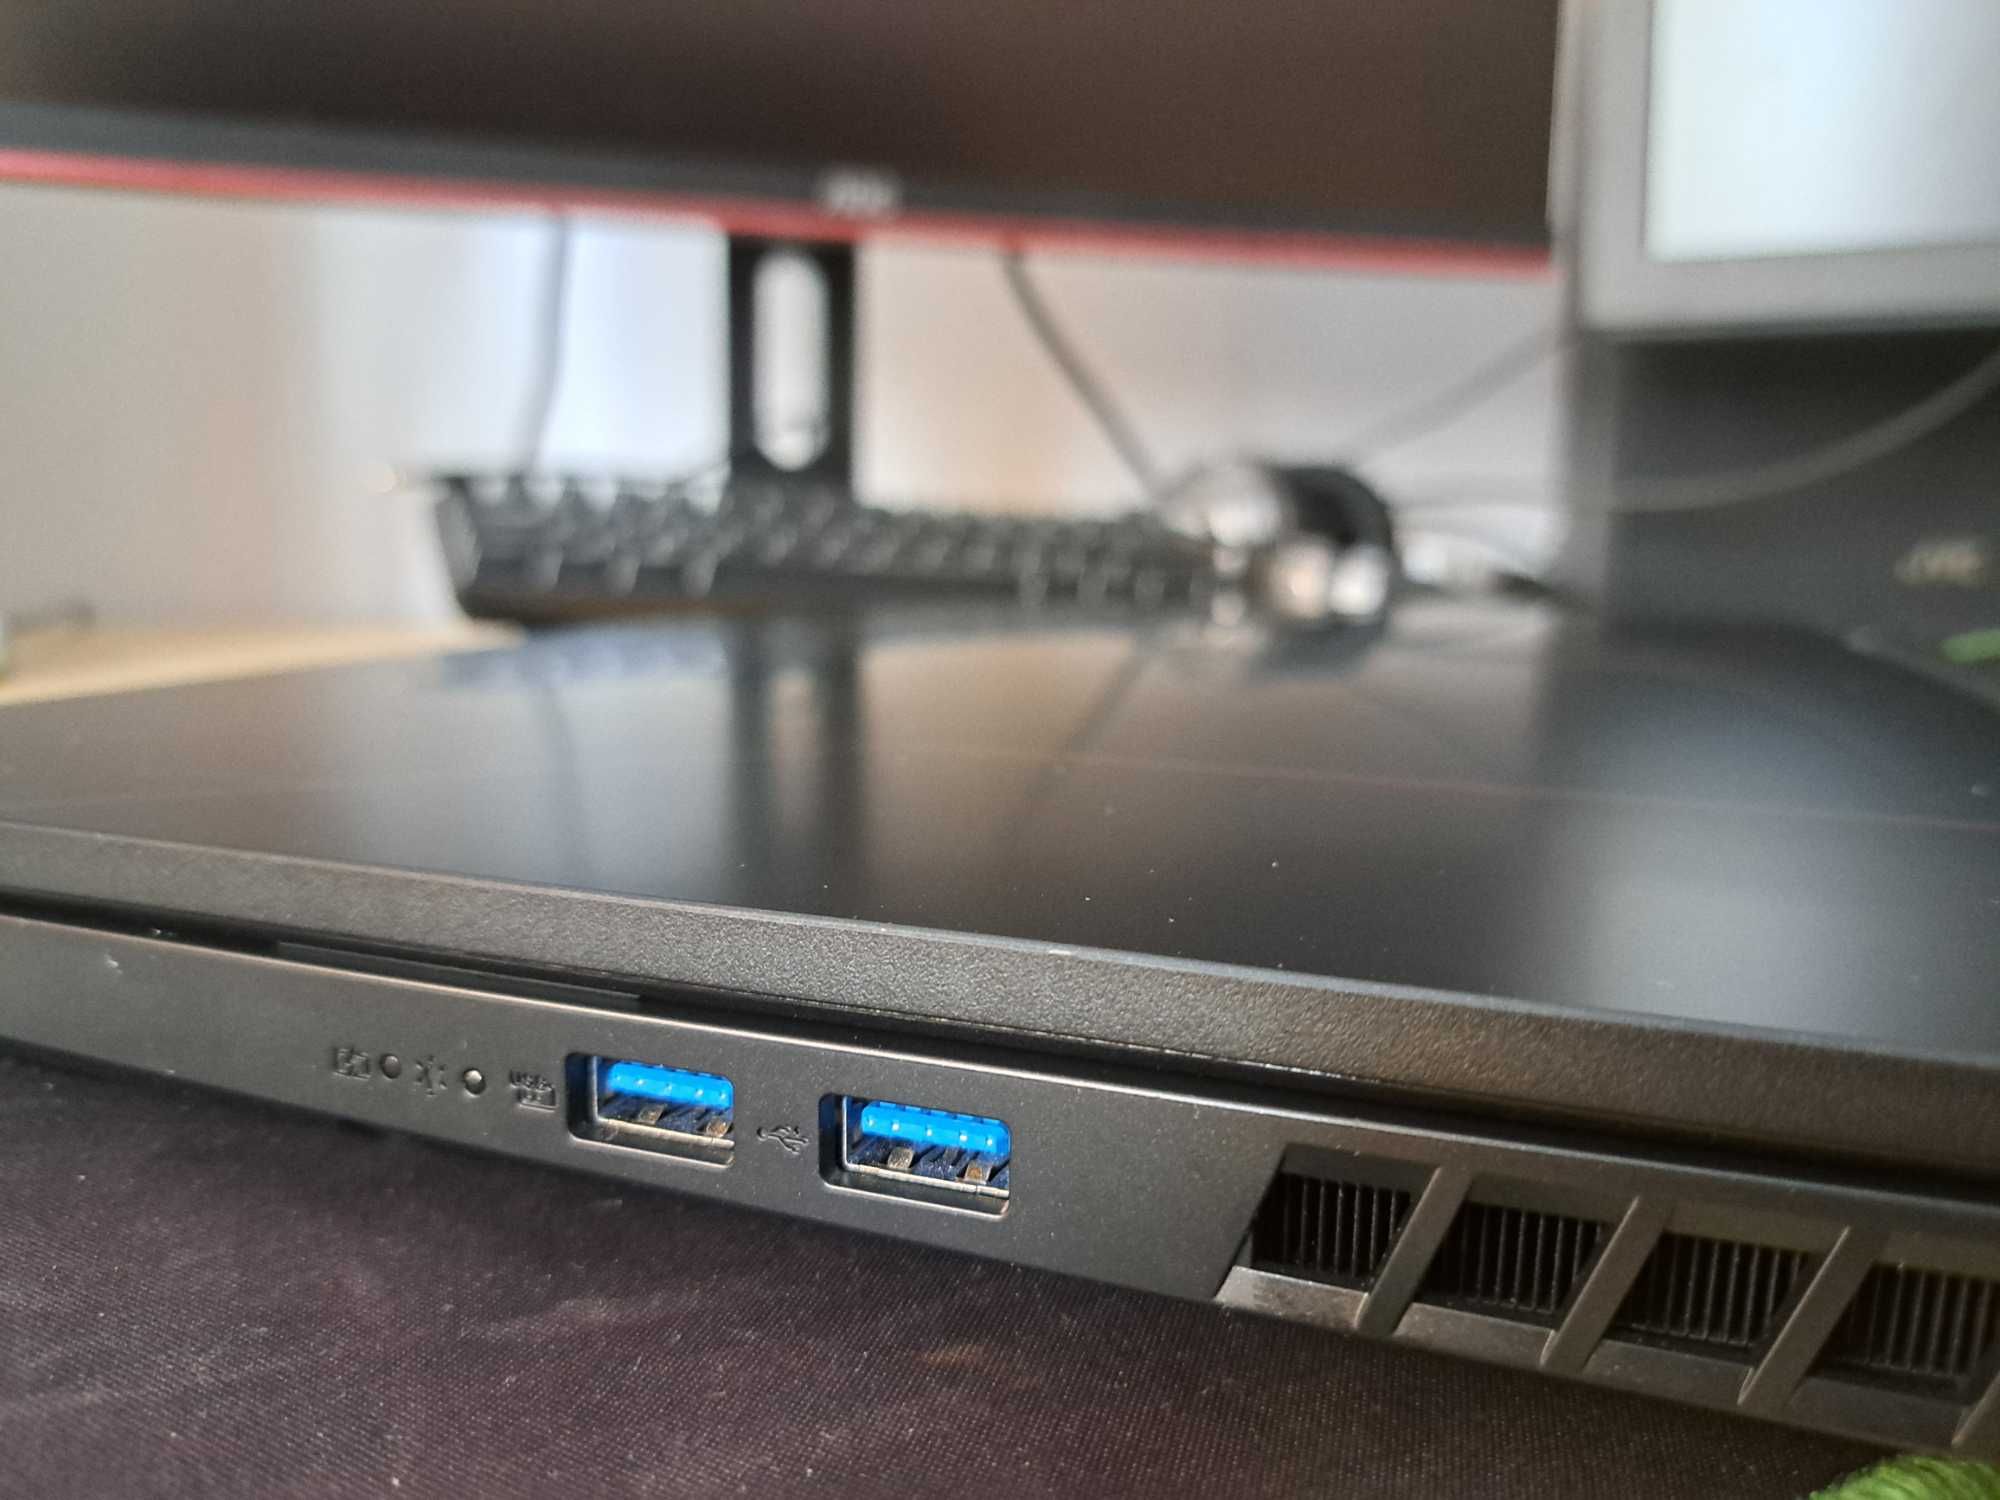 Laptop Gaming Acer Nitro 5 Intel® Core™ i7 RTX™ 3070 144Hz 1TB